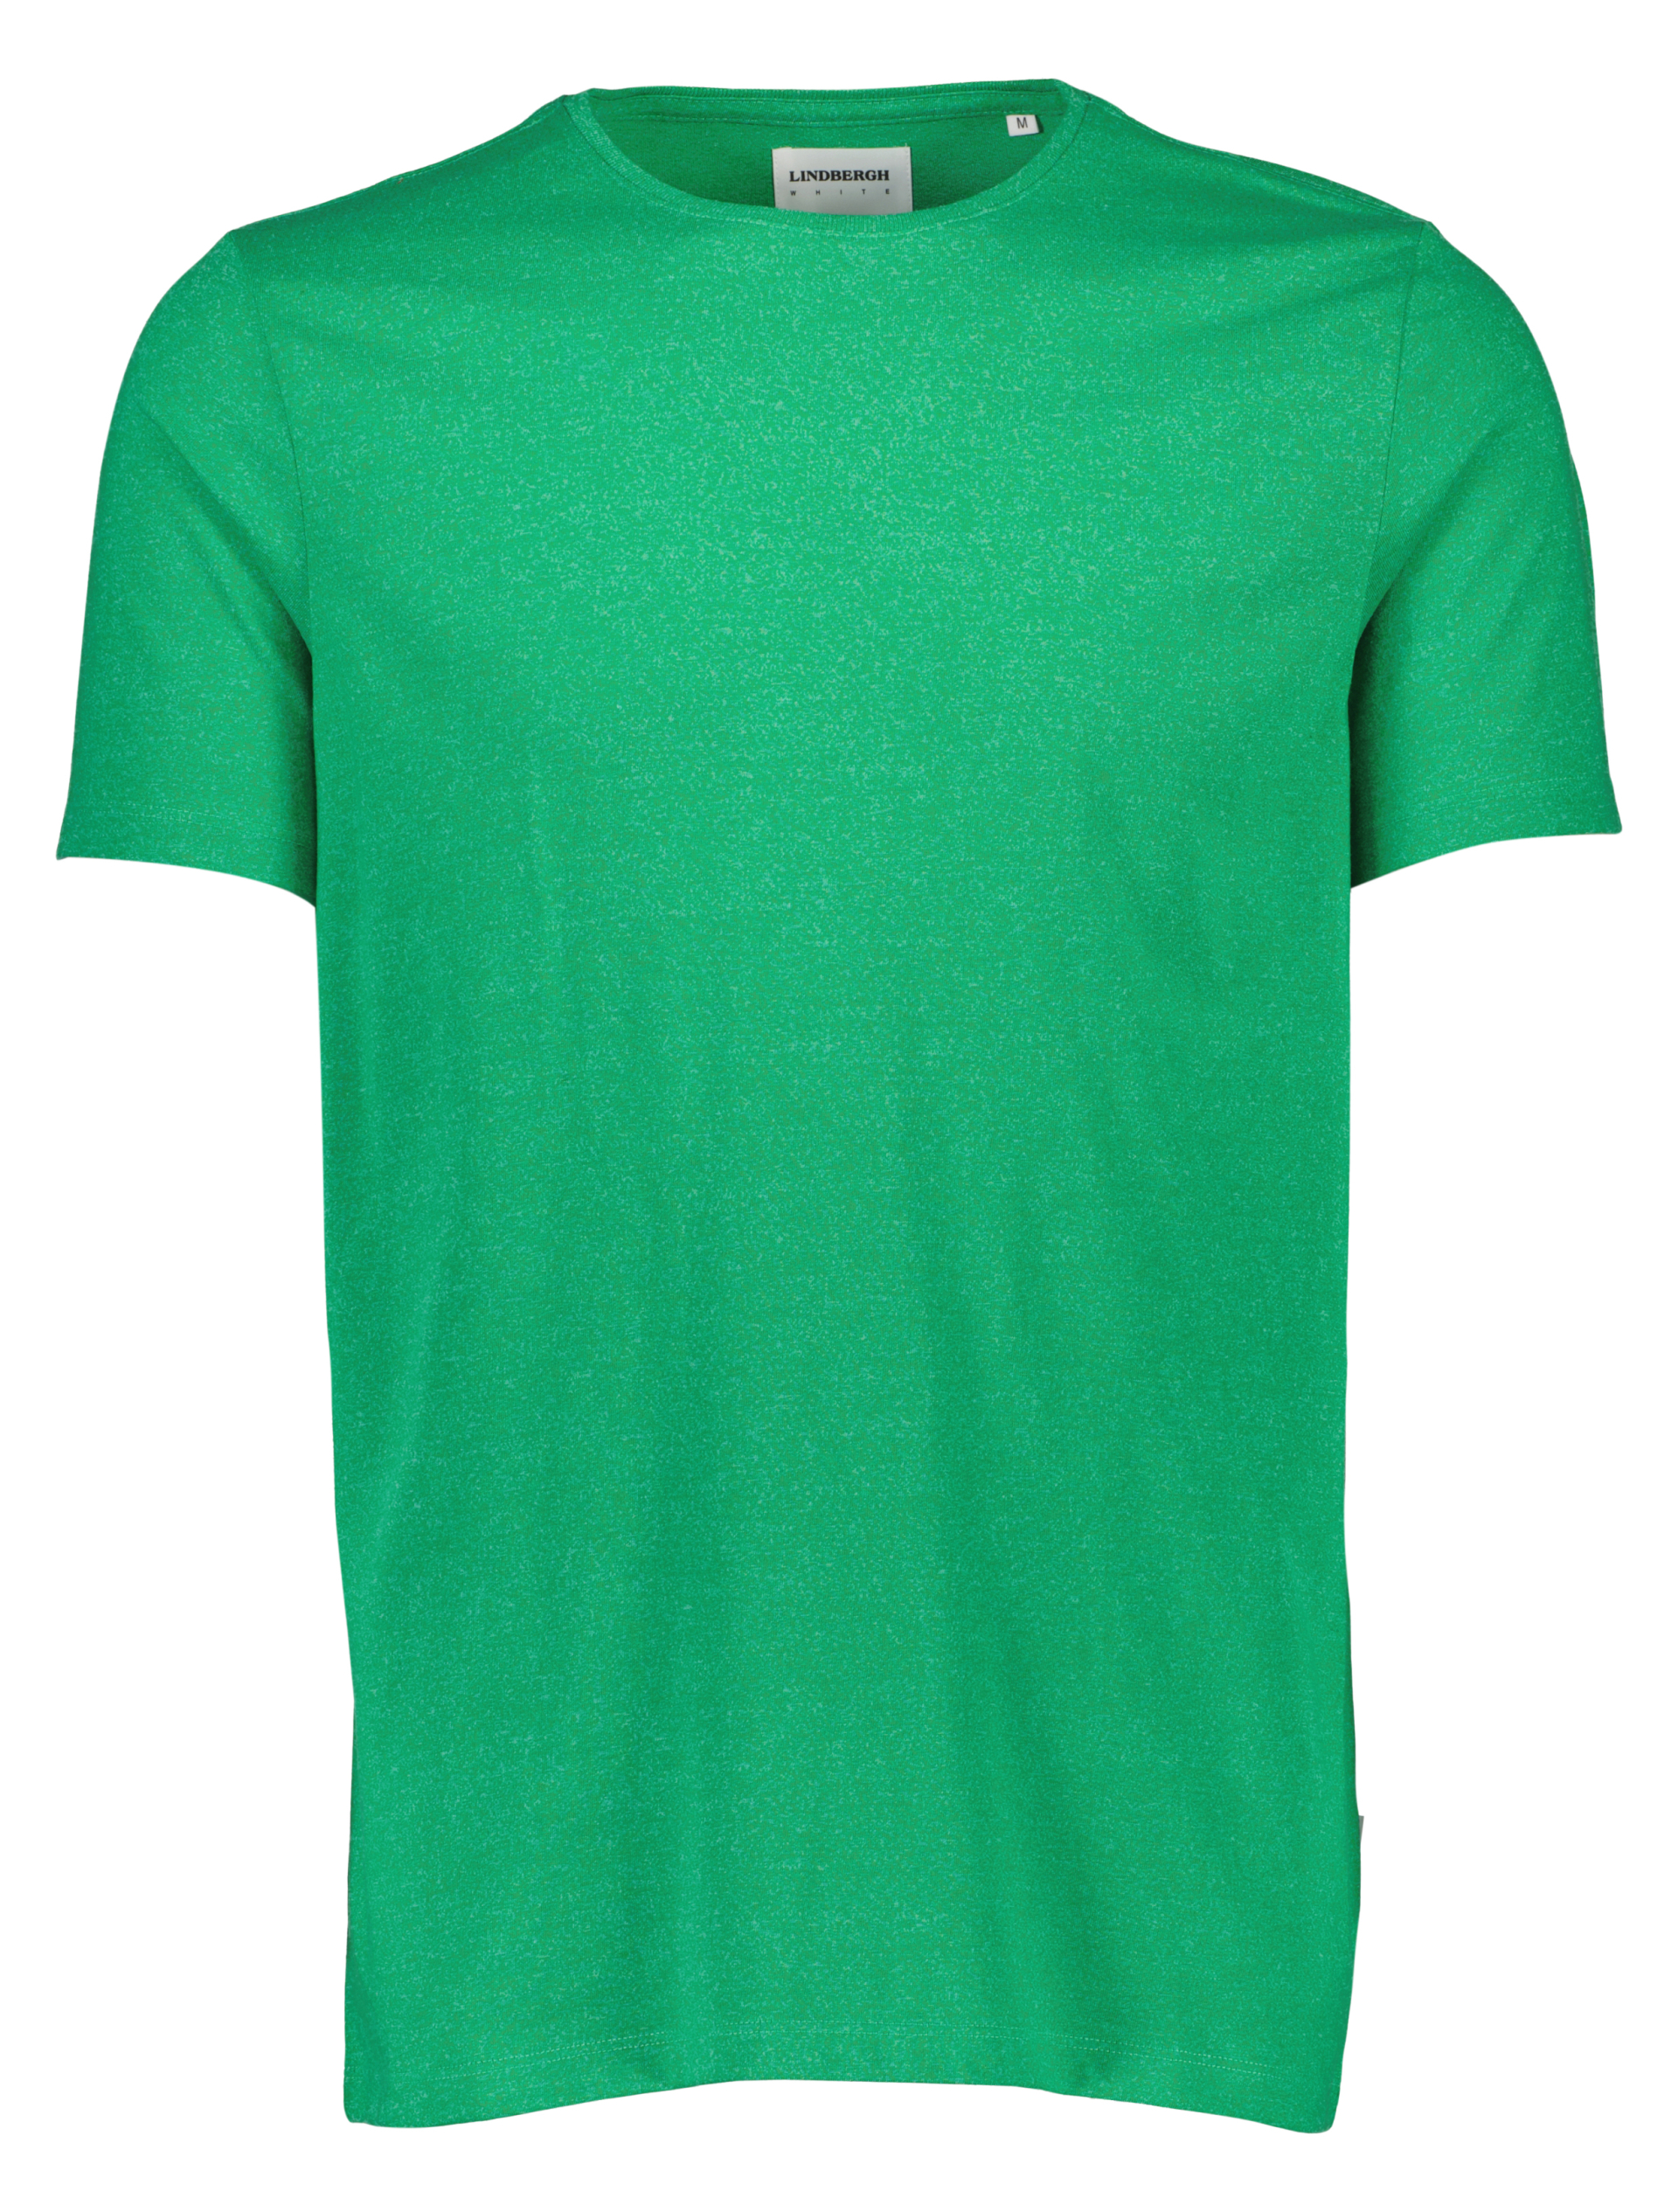 Lindbergh T-shirt grön / bright green mix 323